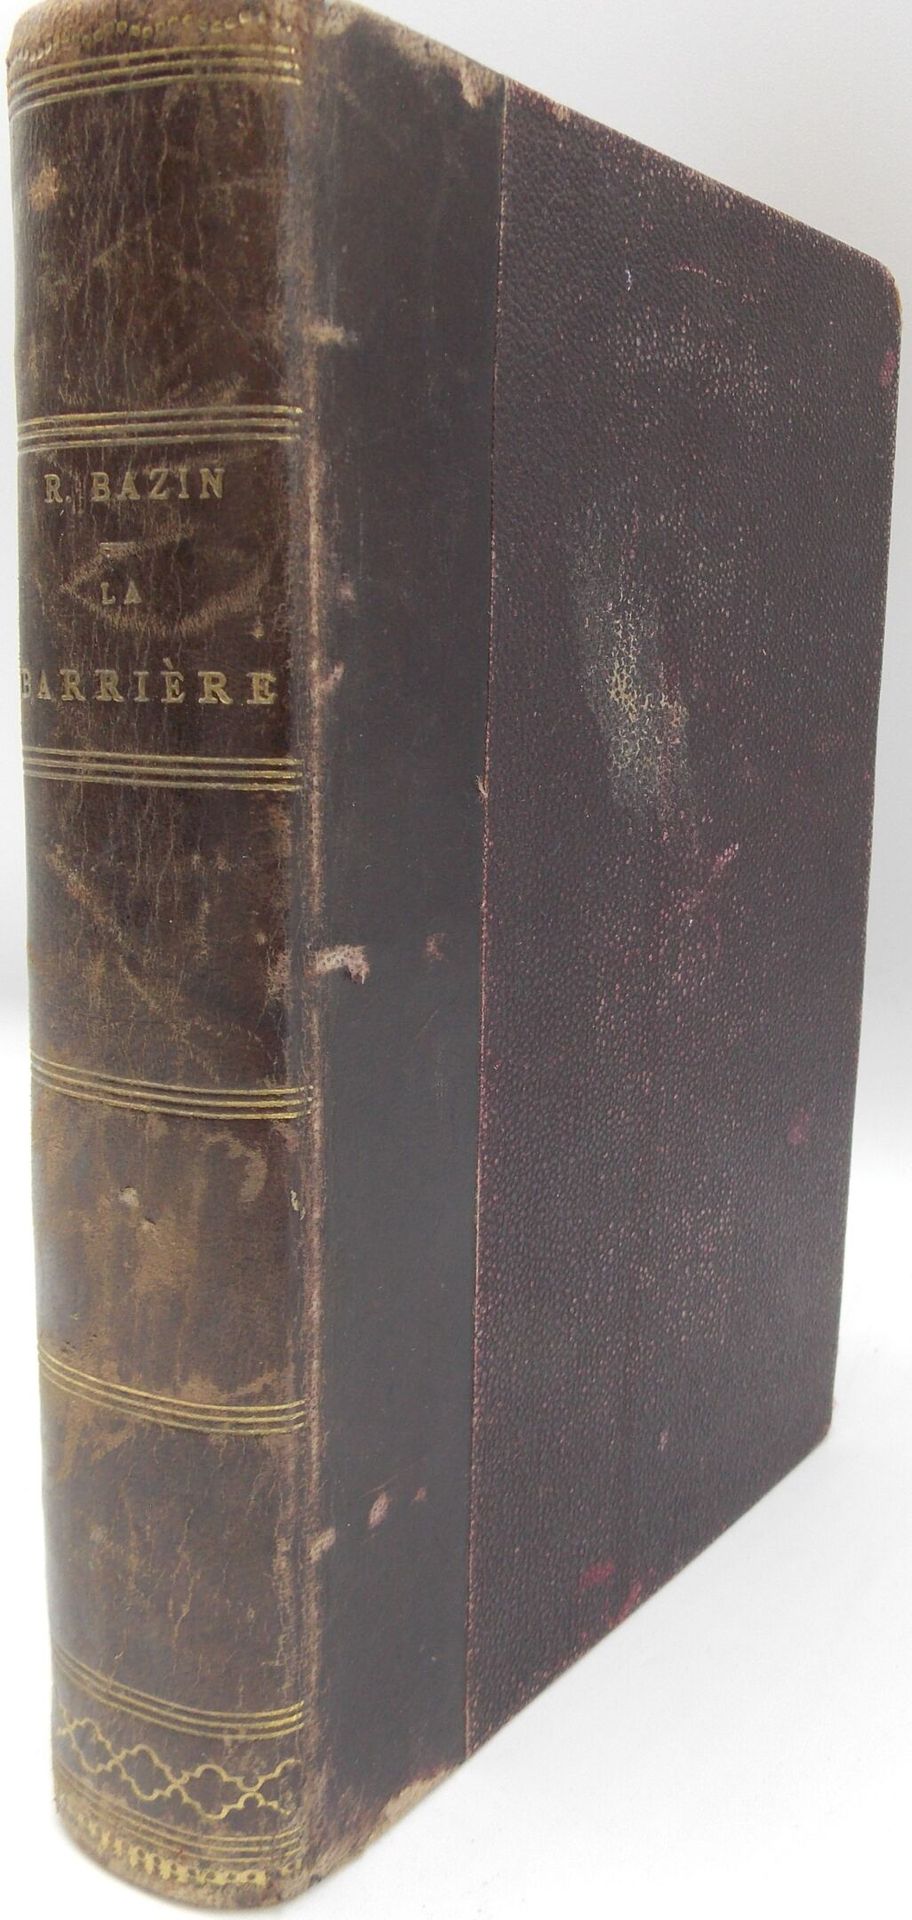 Null BAZIN (René).La Barrière.
巴黎Clamann-Lévy，1909年，12开本，半棕色装订，书脊有装饰。
磨损和撕裂。

抽签&hellip;